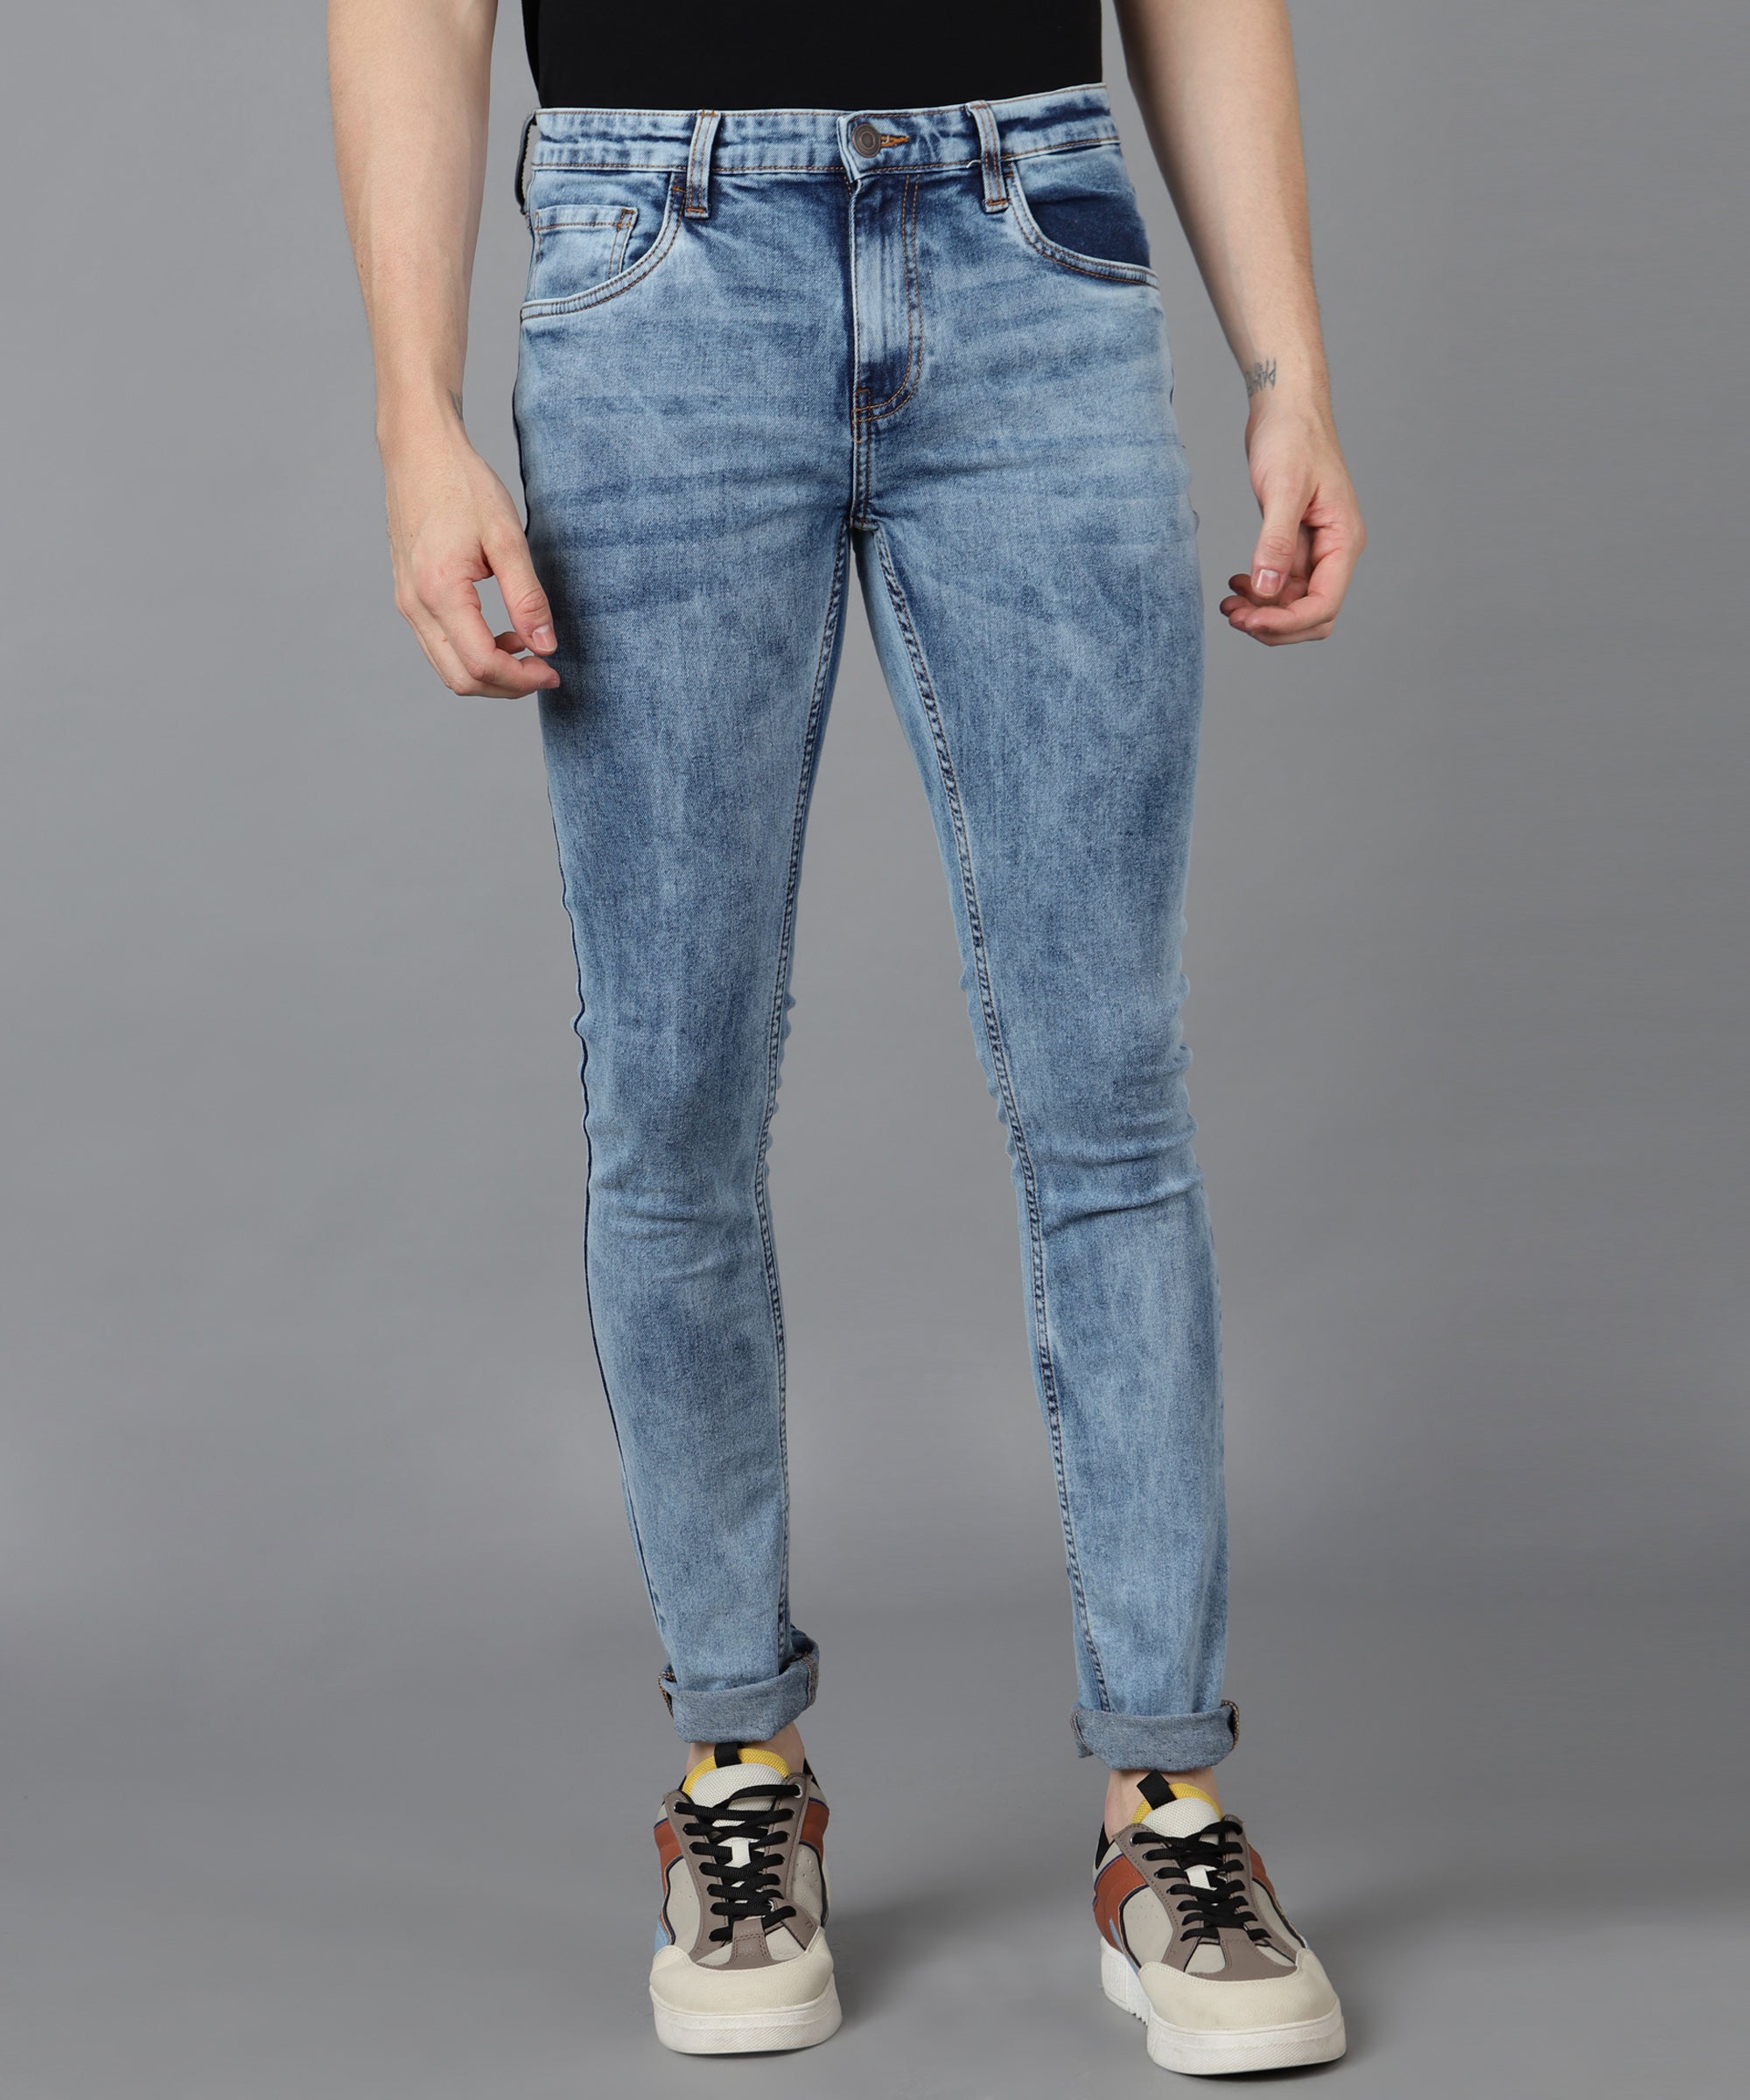 Men's Light Blue Skinny Fit Washed Jeans Stretchable